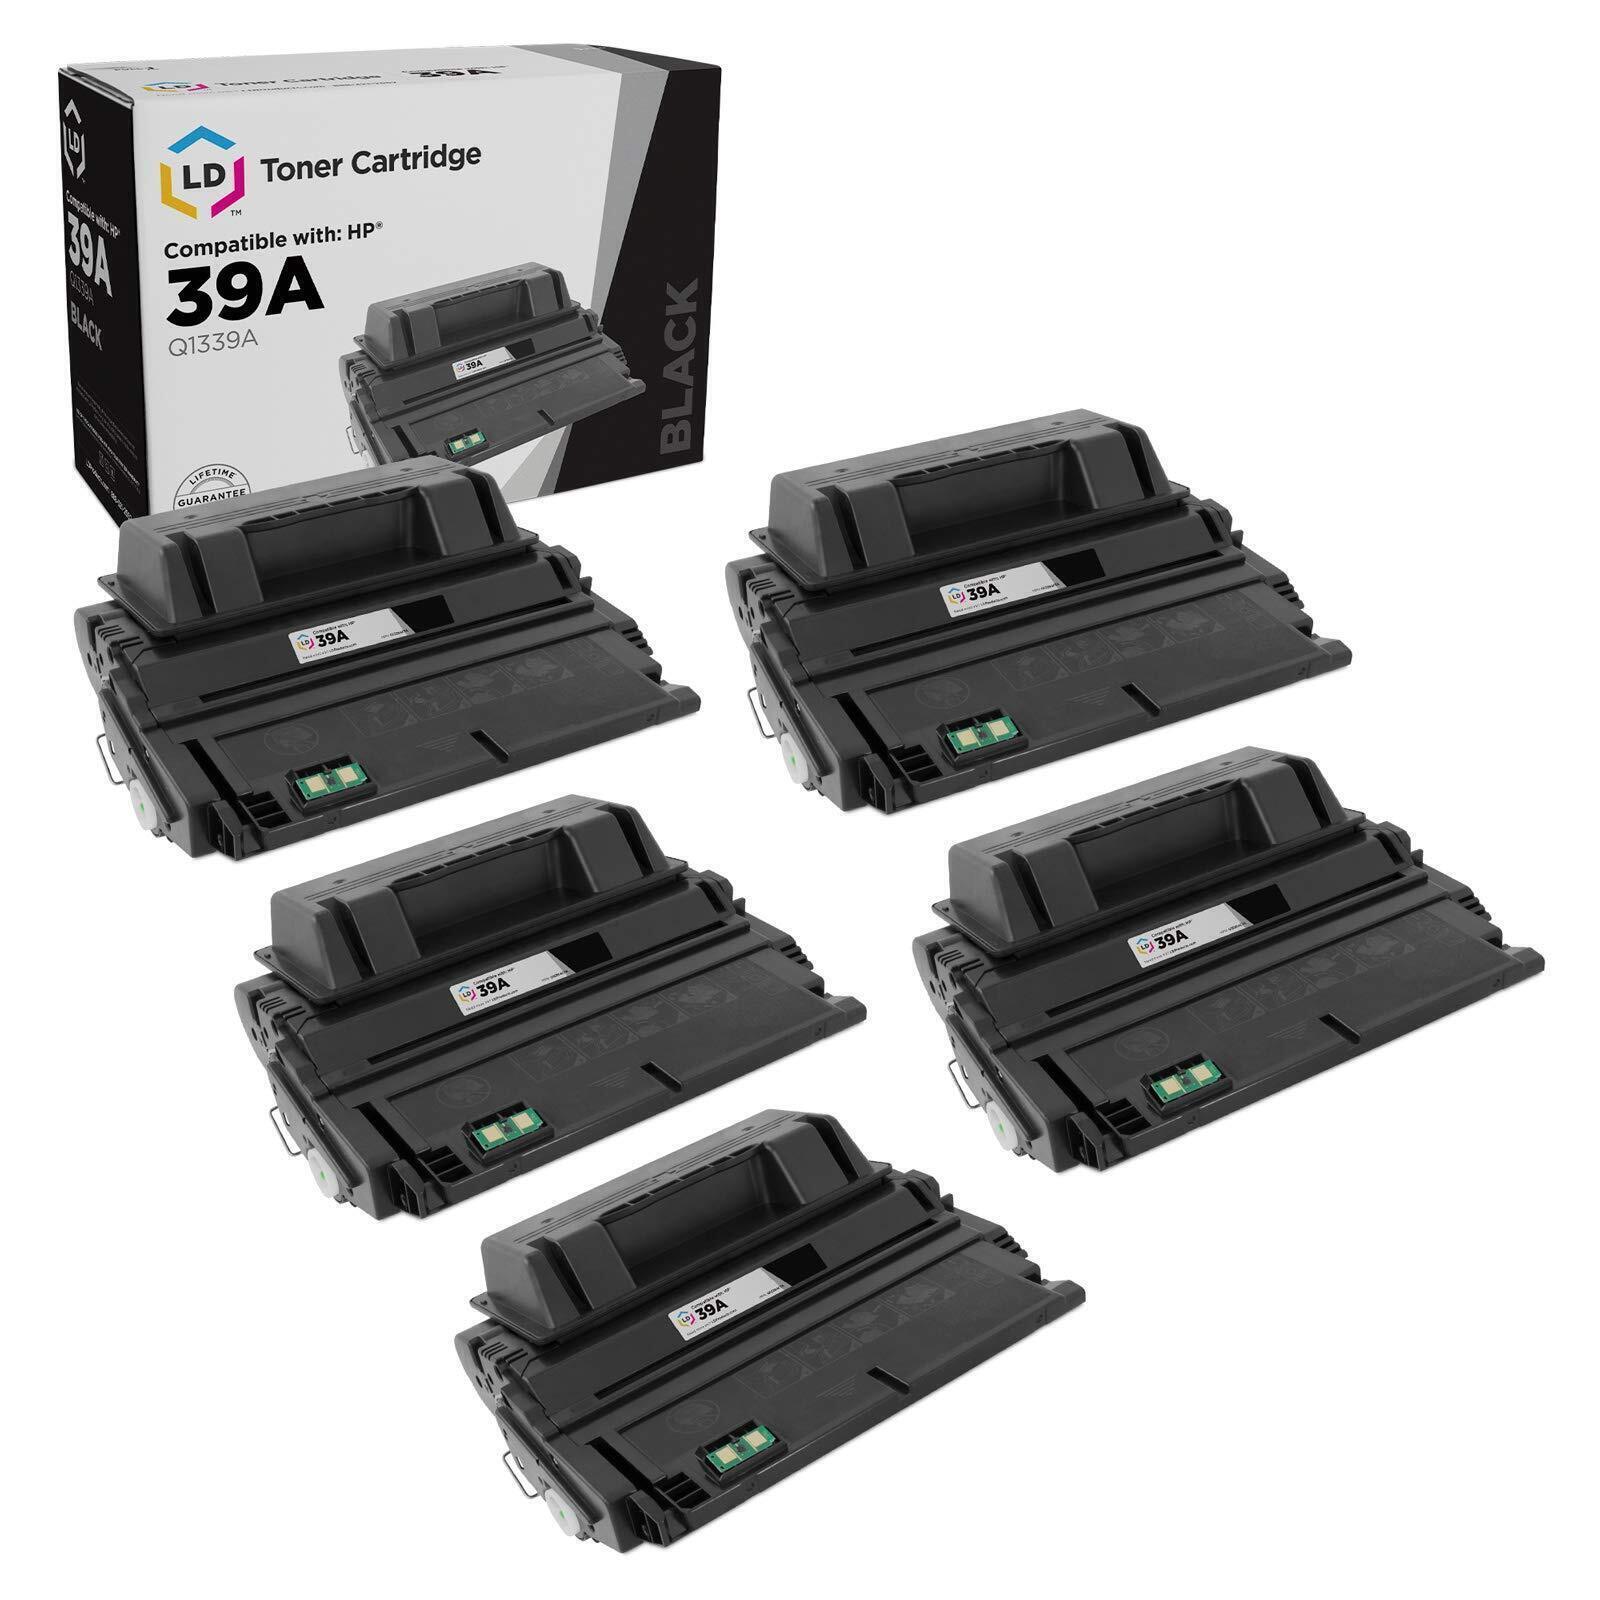 LD Compatible Replacements for HP 39A / Q1339A 5PK Black Toner Cartridges